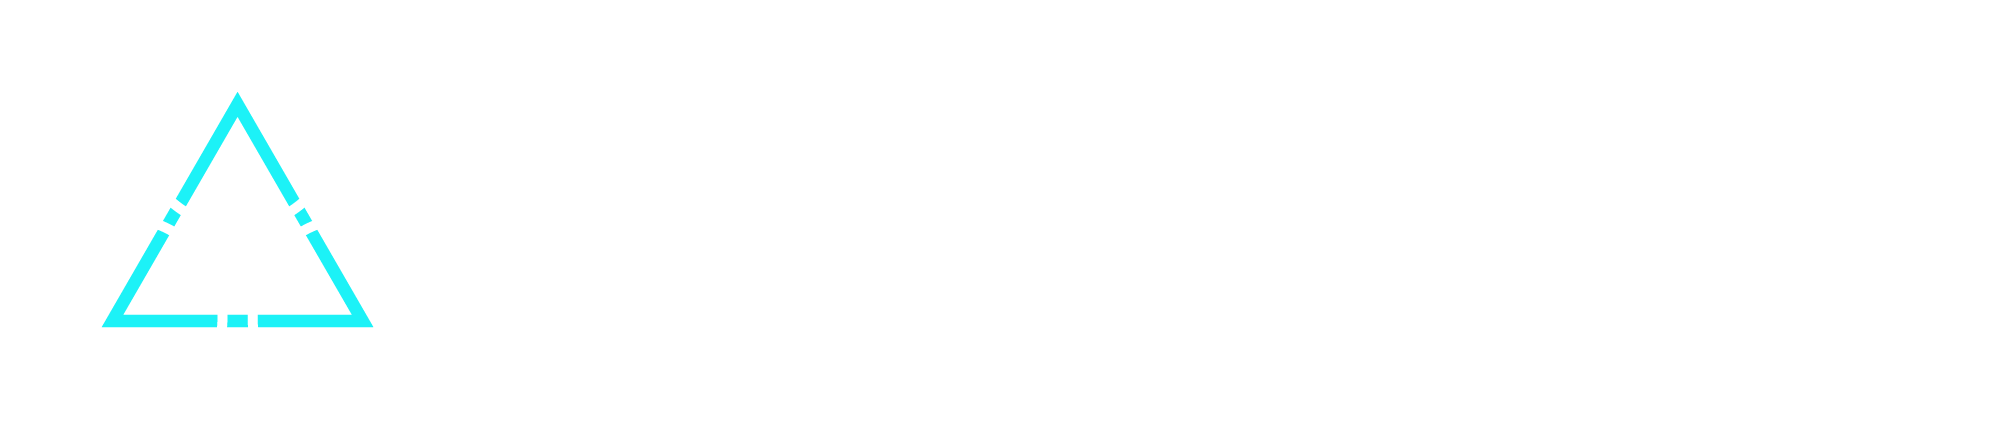 SFF-logo-wide-white-EN